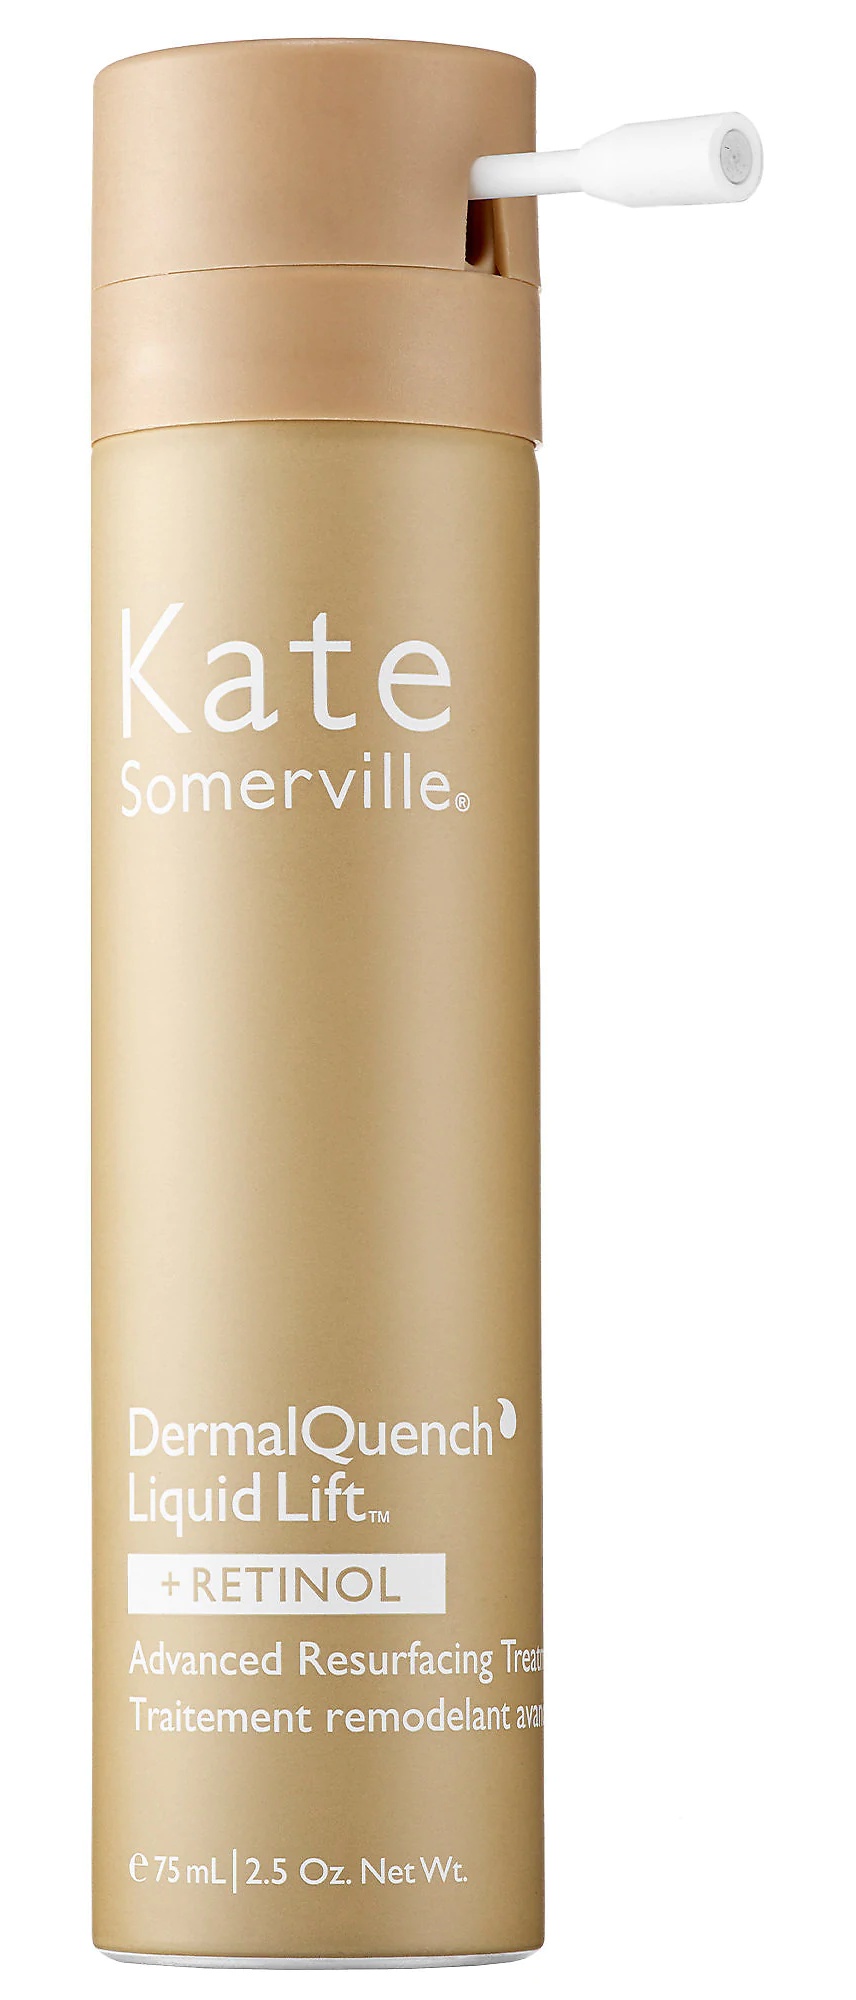 Kate Somerville Dermalquench Liquid Lift™ + Retinol Advanced Resurfacing Treatment